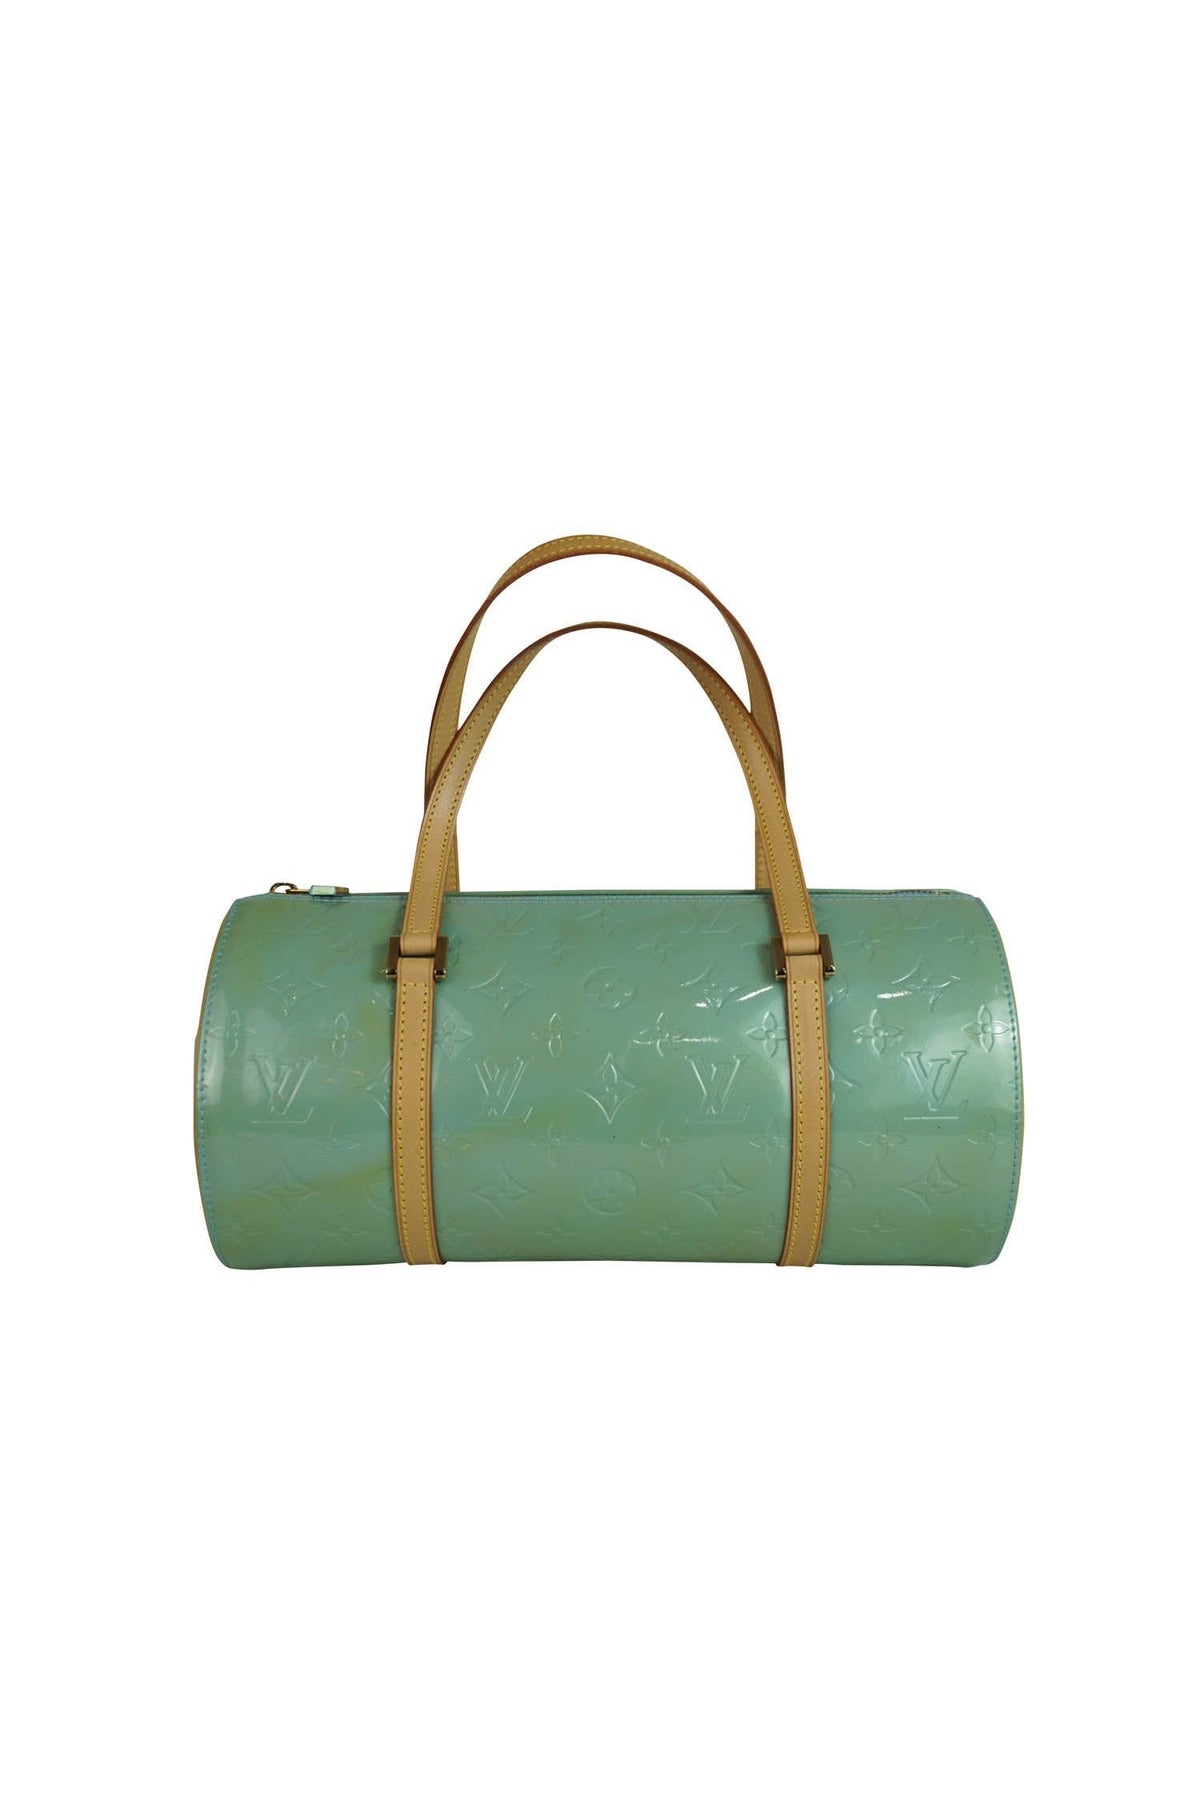 Louis Vuitton, Bags, Louis Vuitton Green Vernis French Purse Wallet